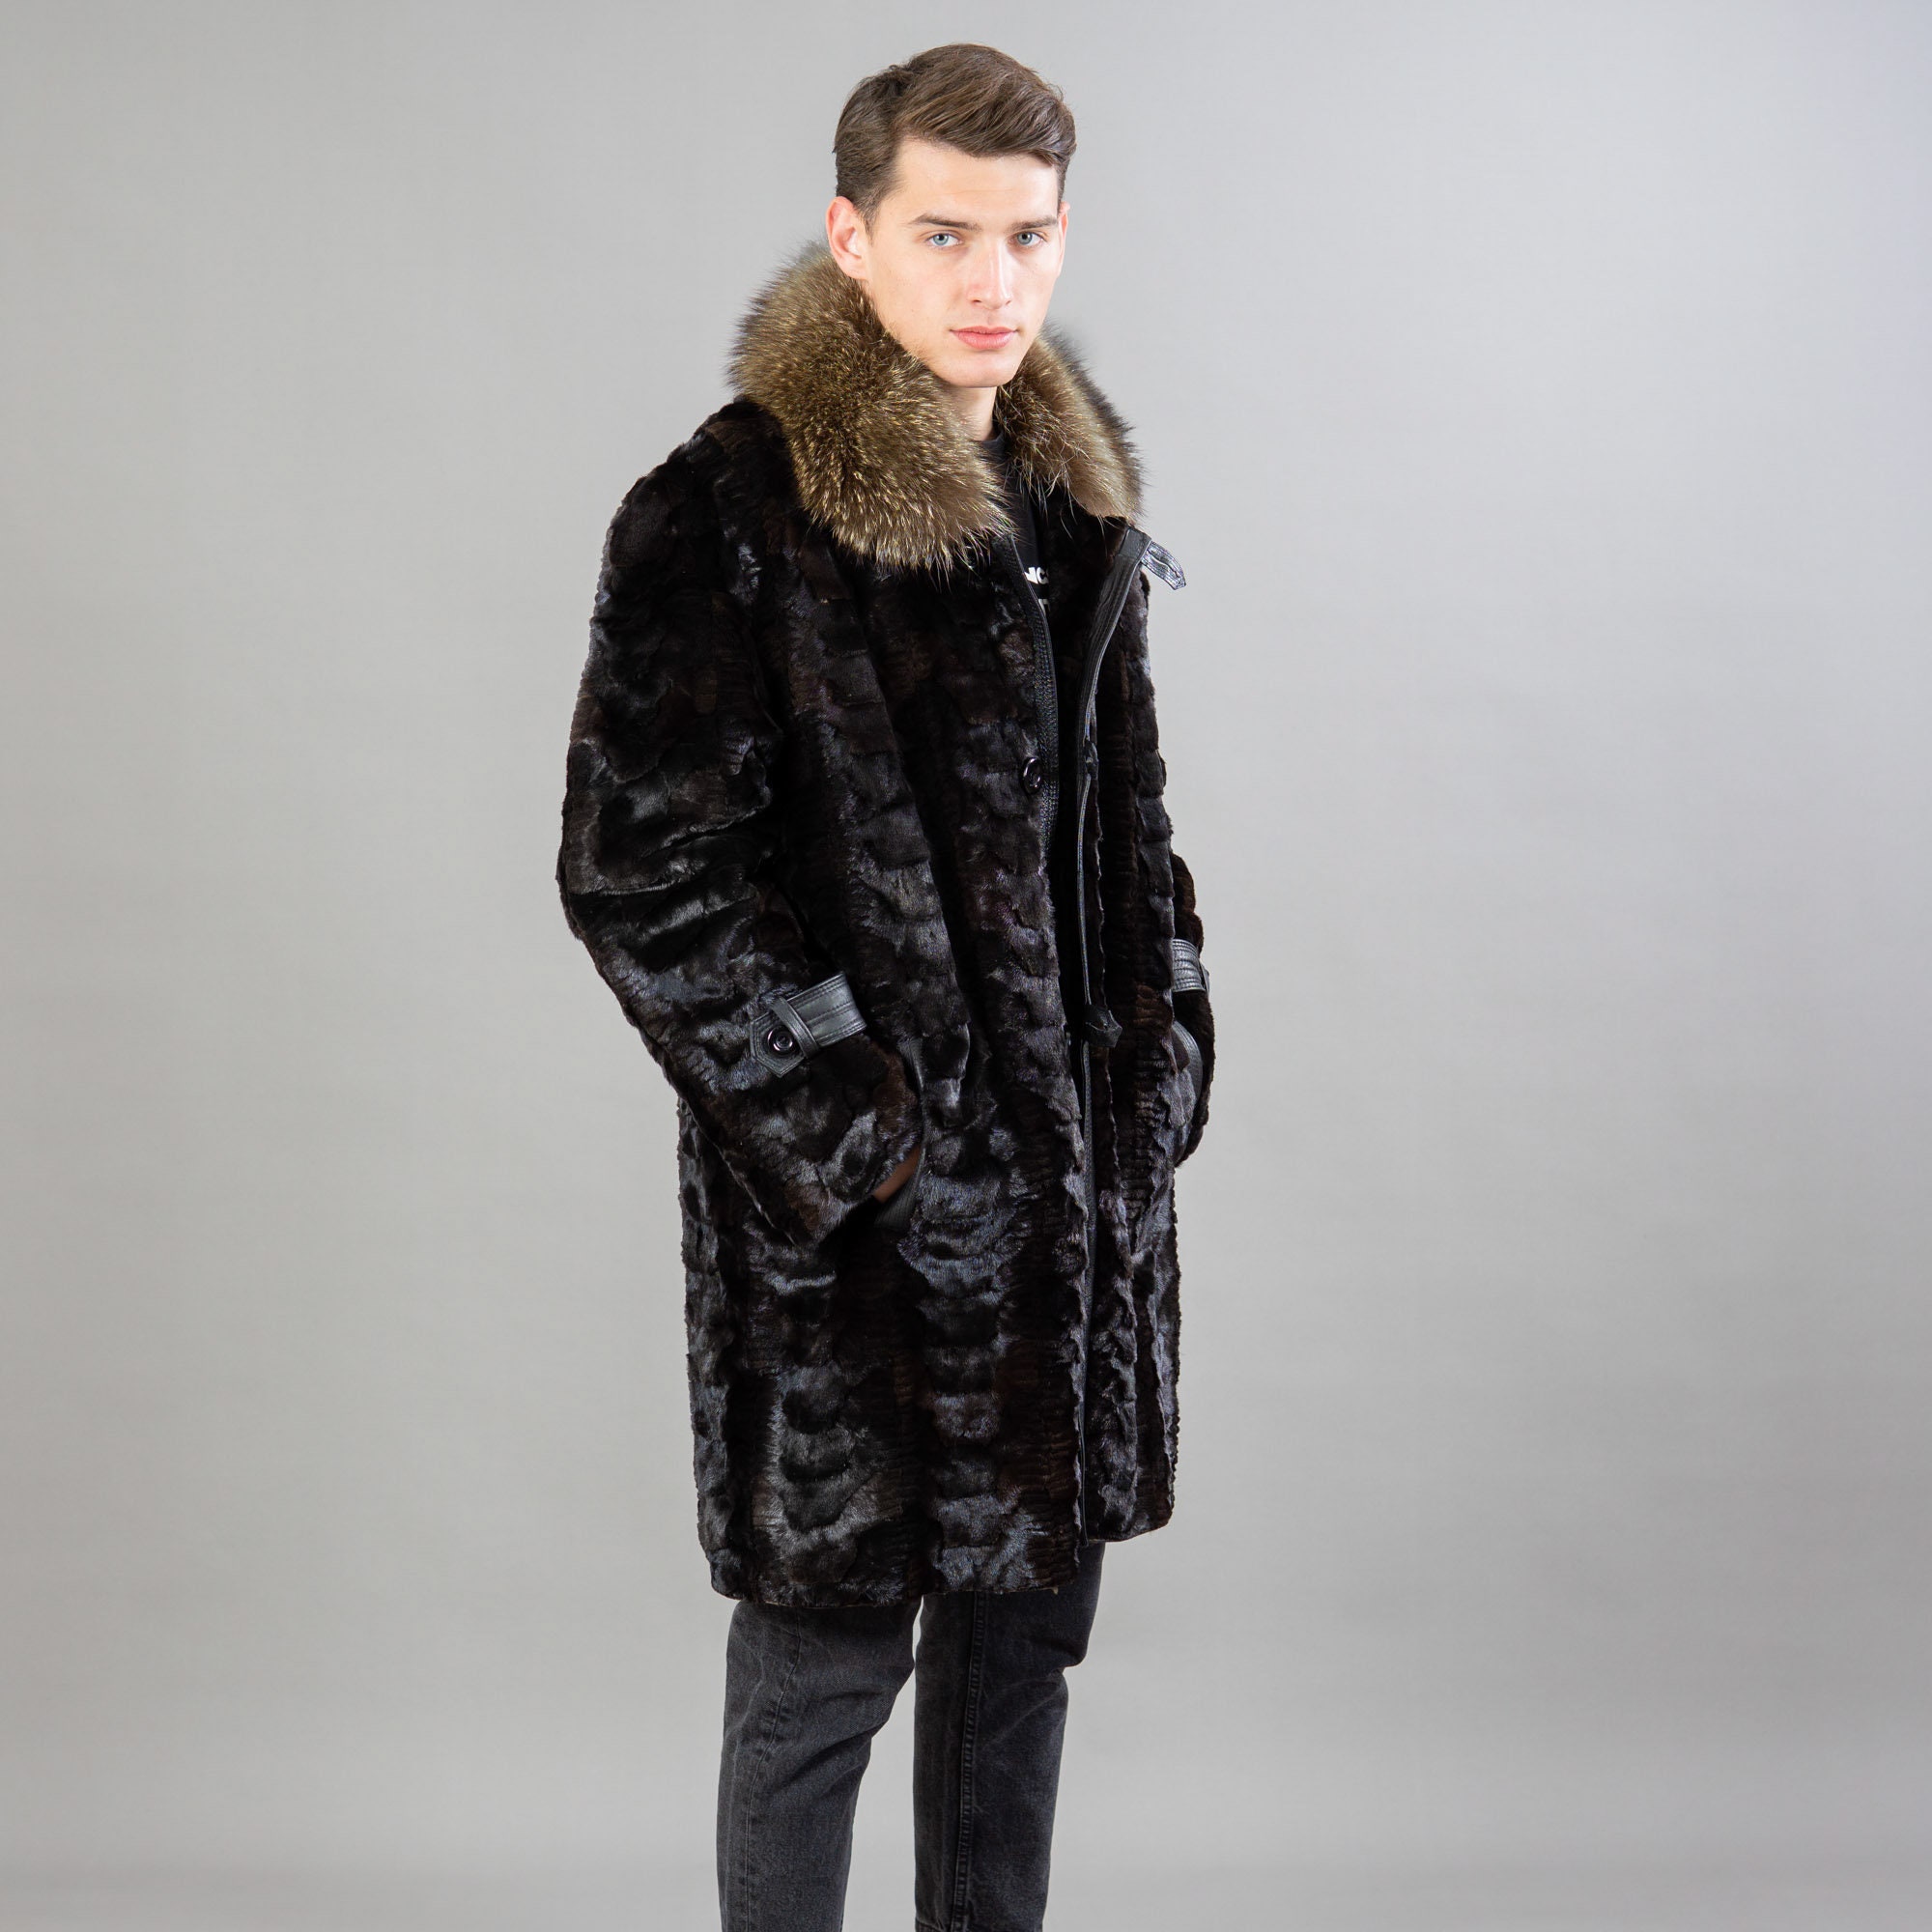 Men Winter Mink Fur Coat in Black Color With Raccoon Fur - Etsy